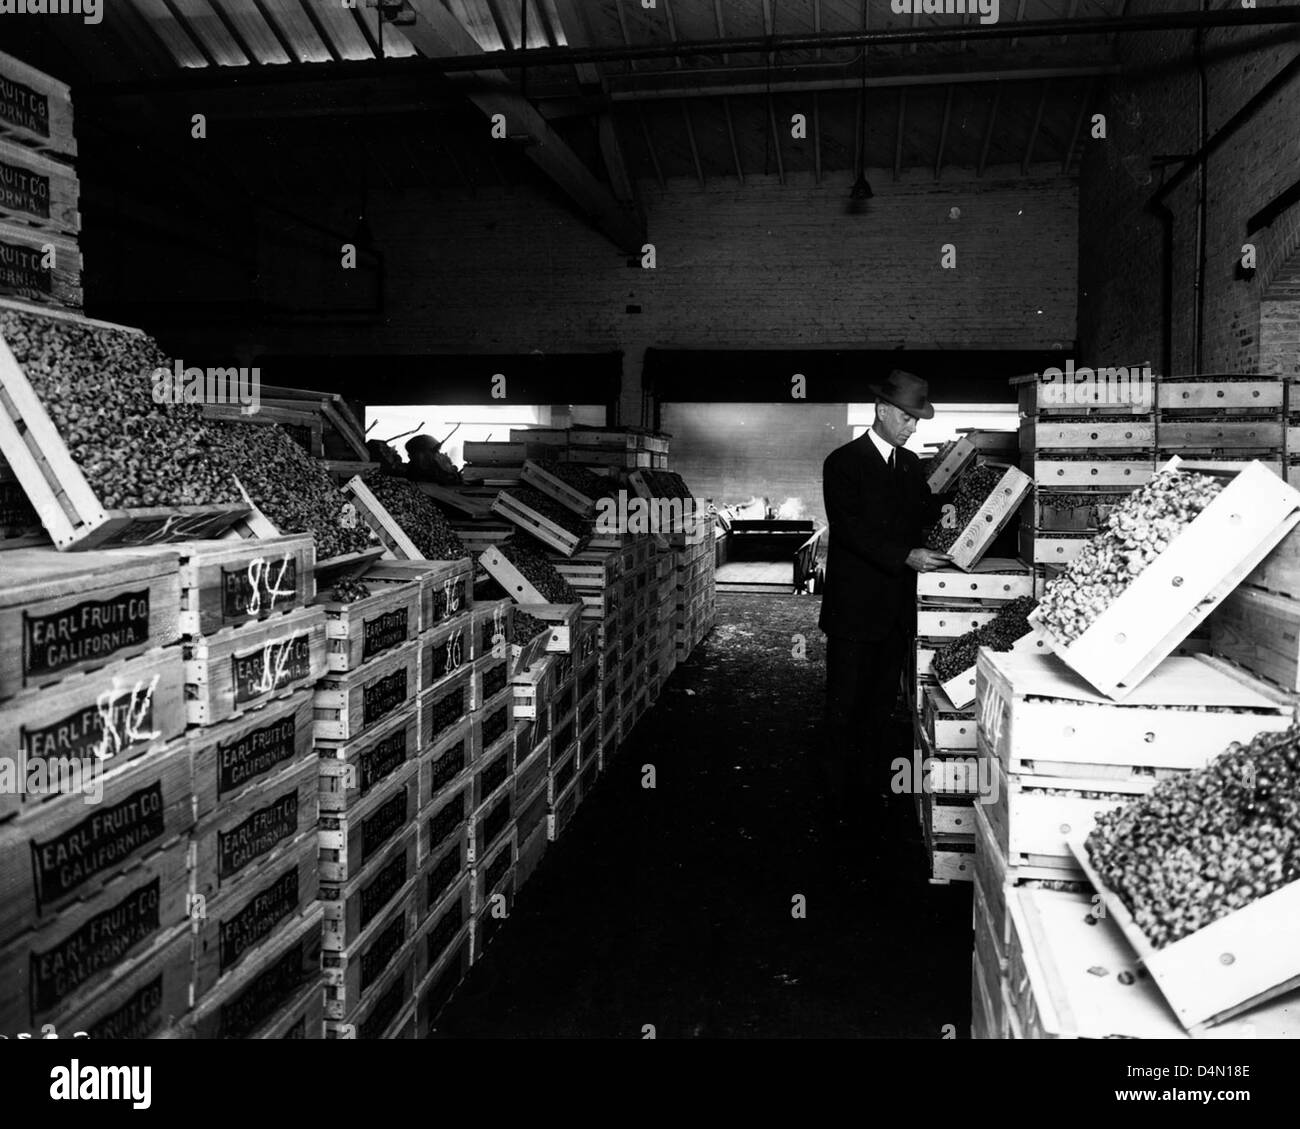 FDA History - Inspecting Fruit Stock Photo